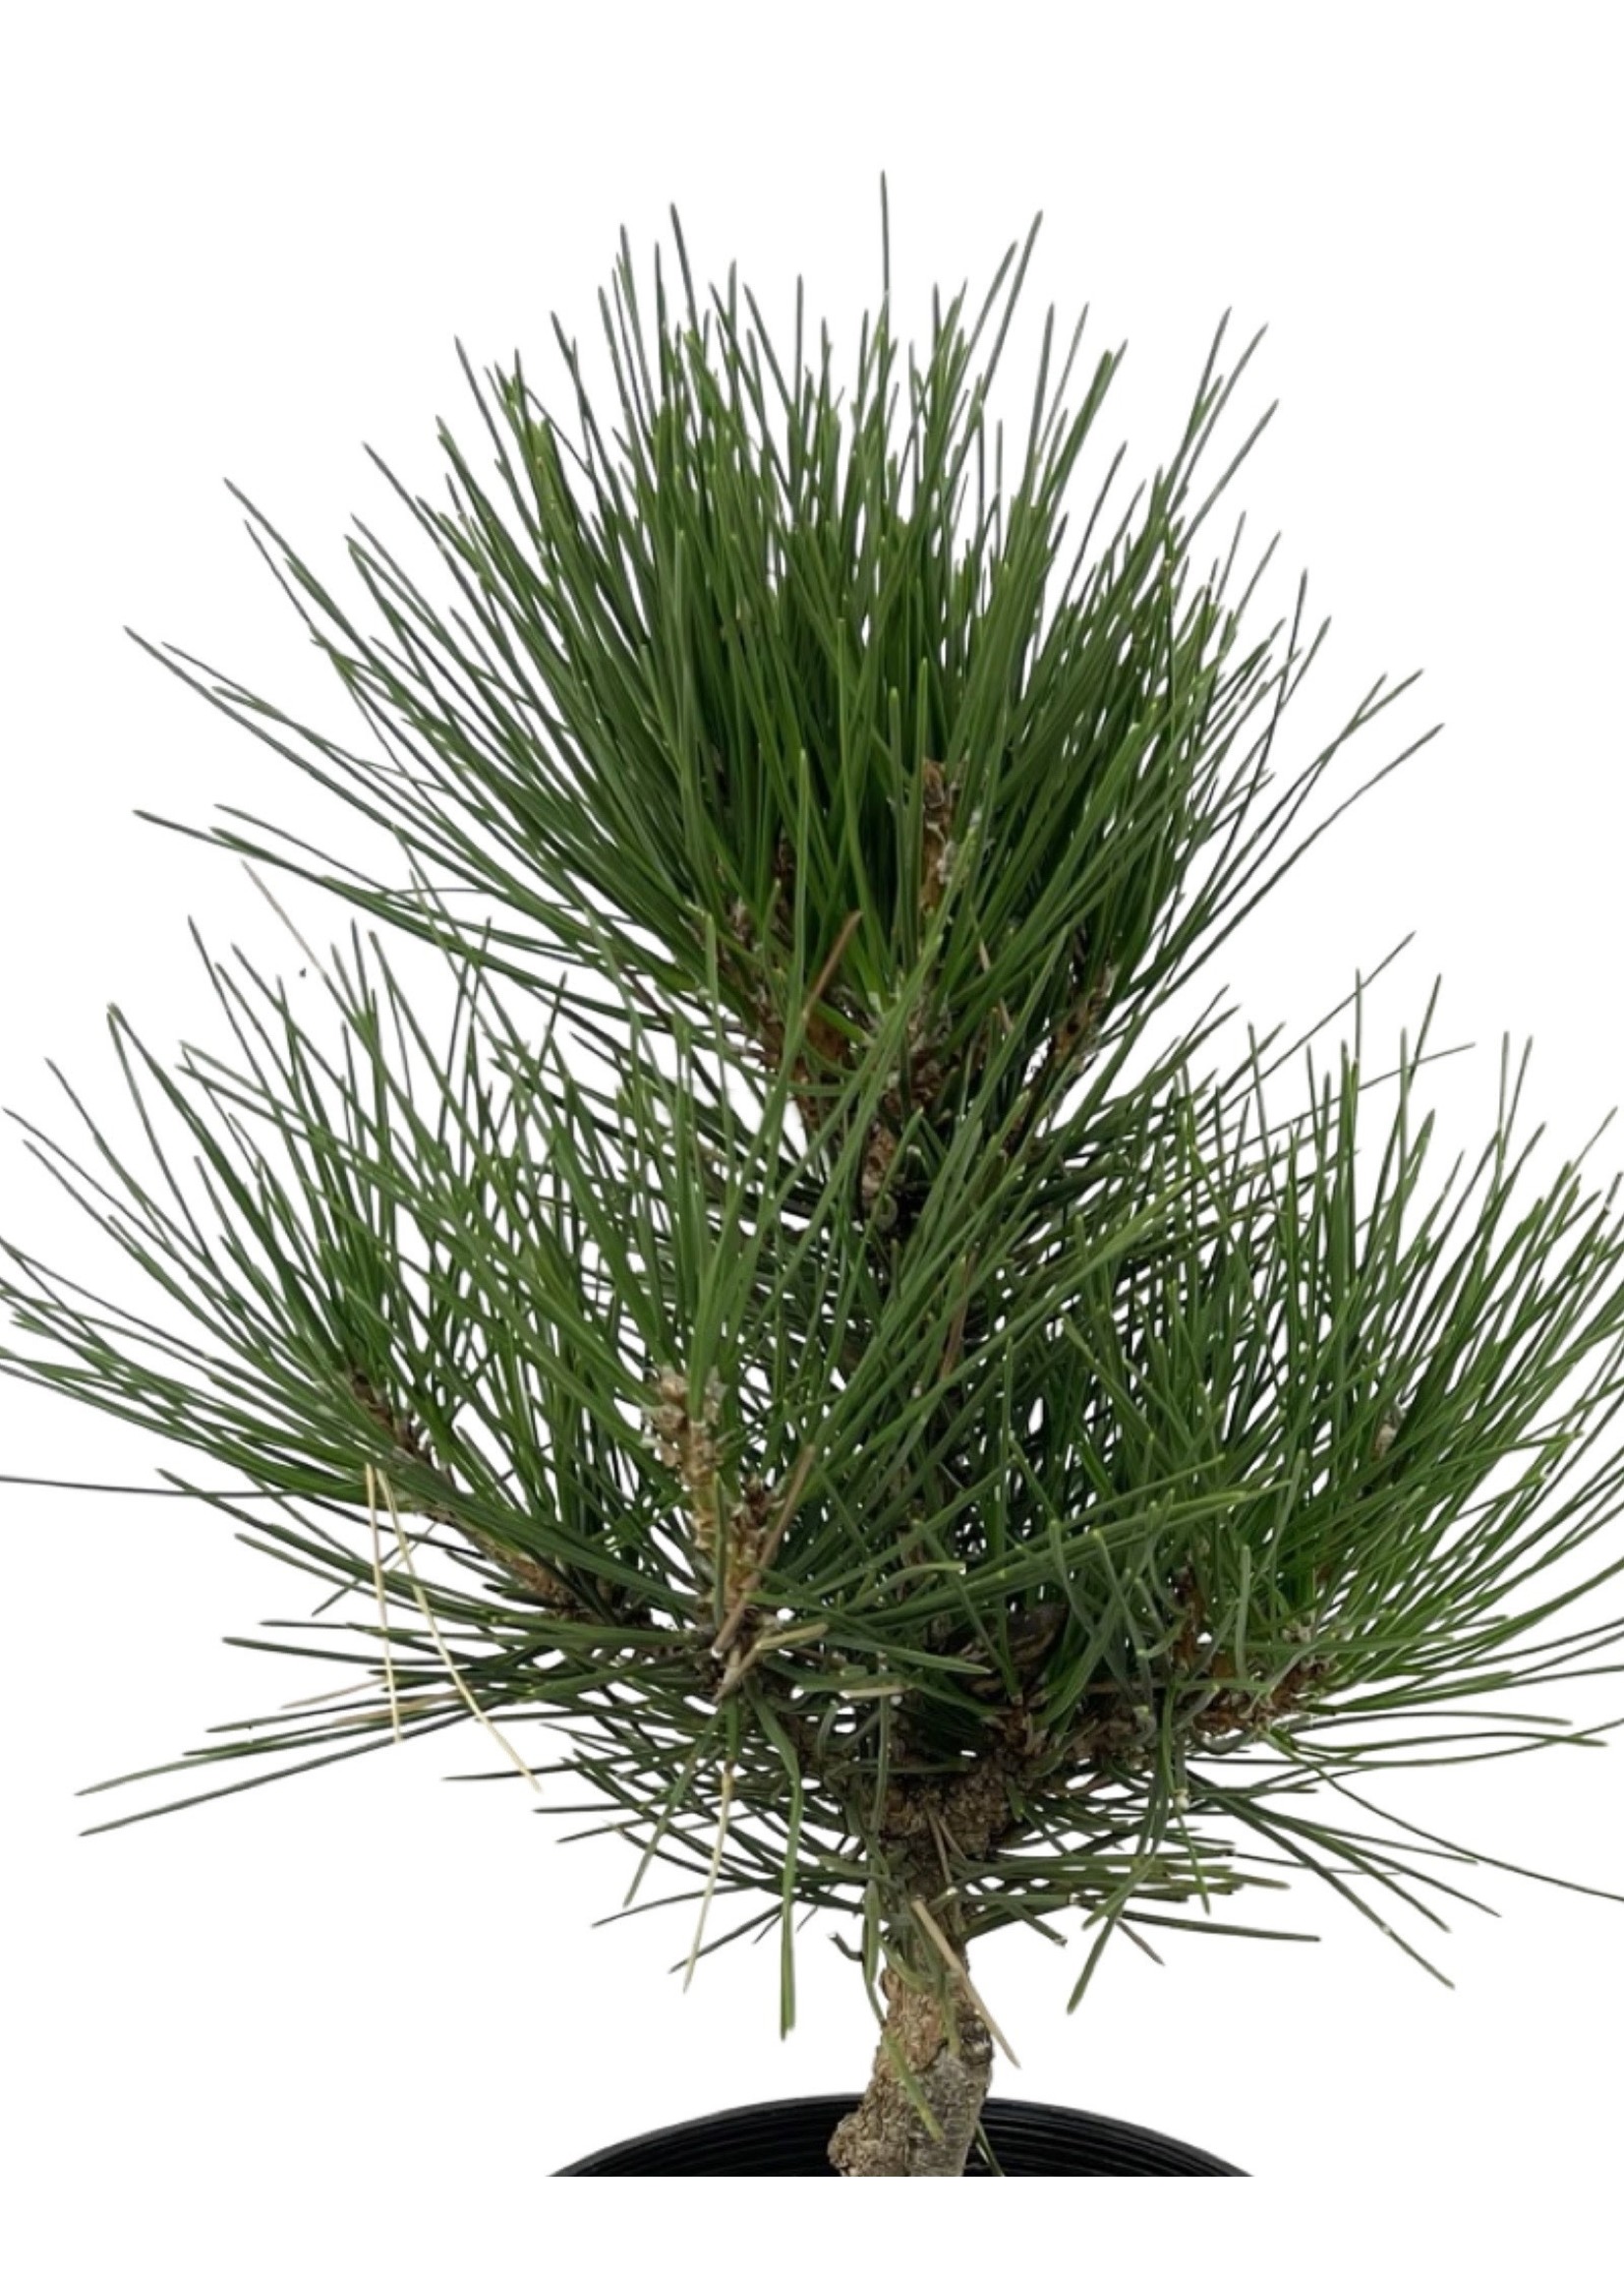 Pinus thunbergiana 'Hakuho' 1 Gallon